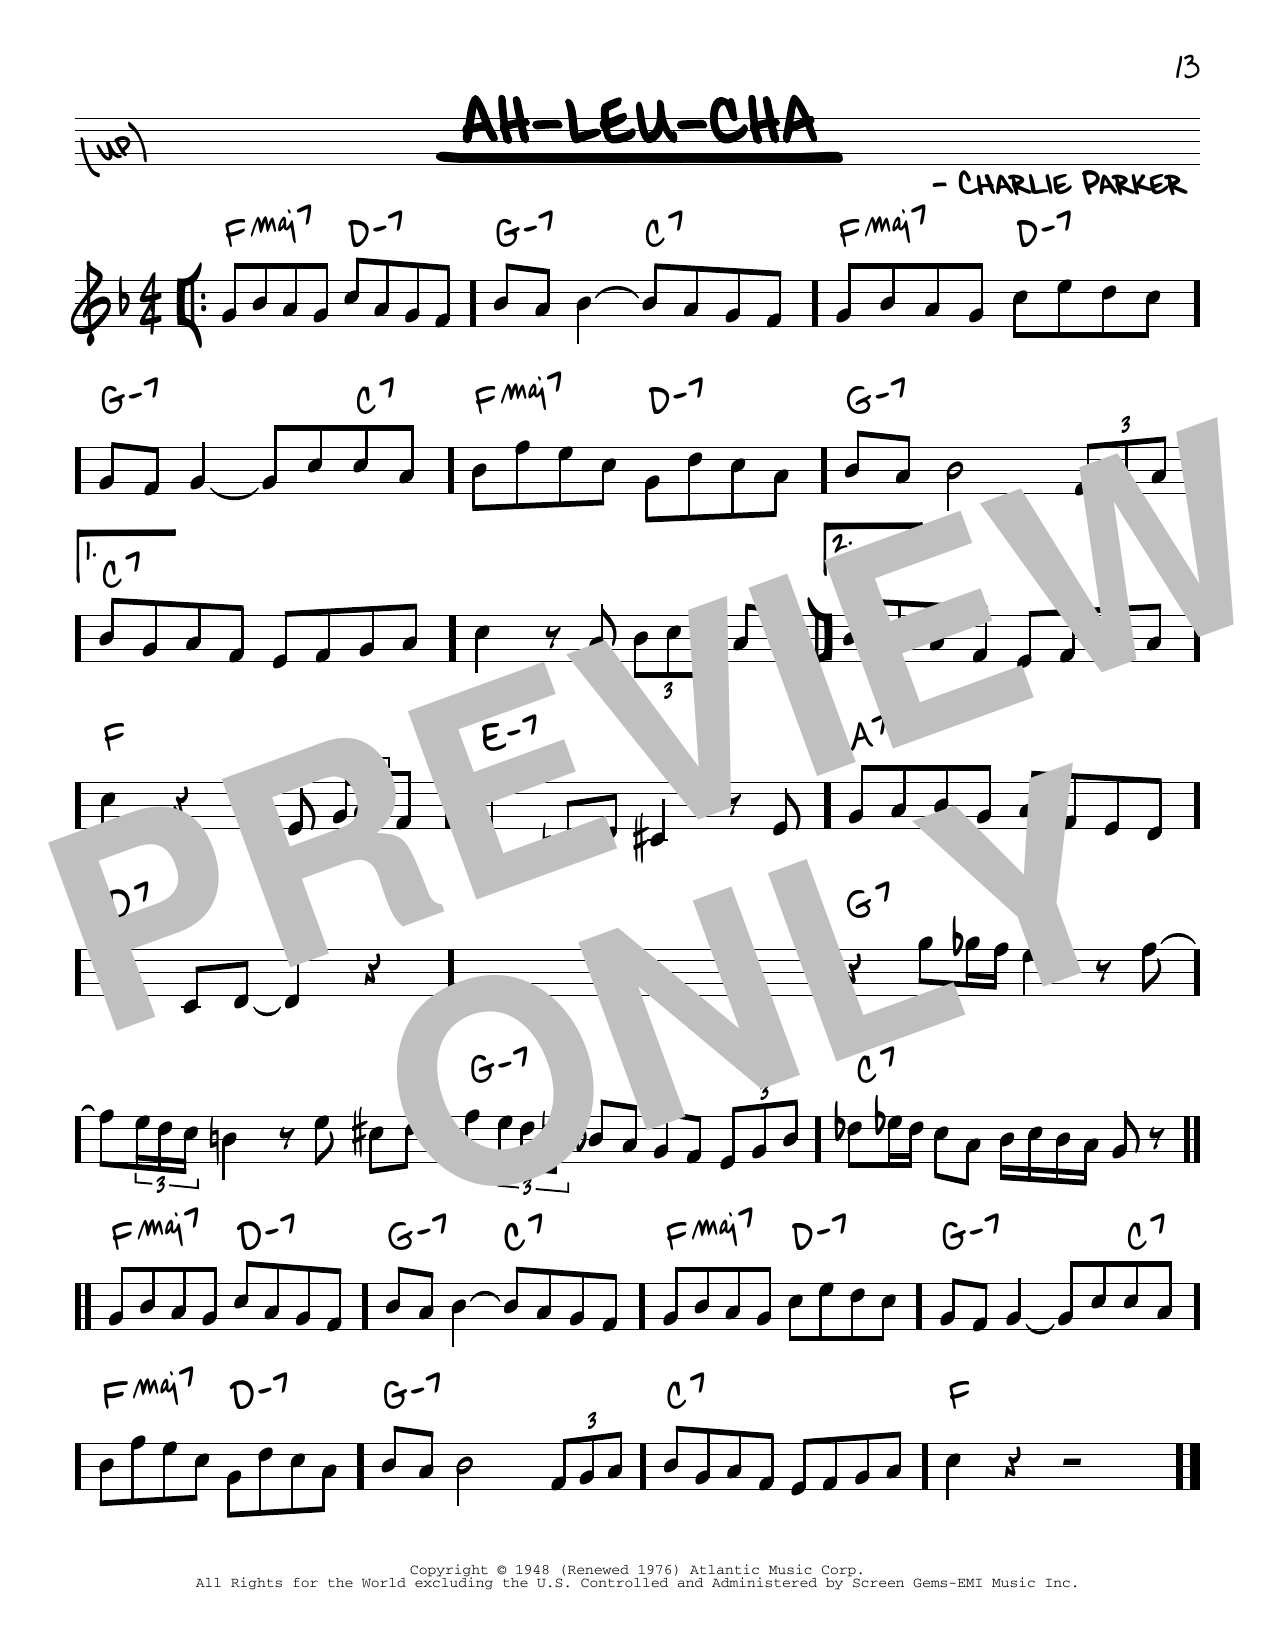 Charlie Parker Ah-Leu-Cha Sheet Music Notes & Chords for Real Book – Melody & Chords - Download or Print PDF